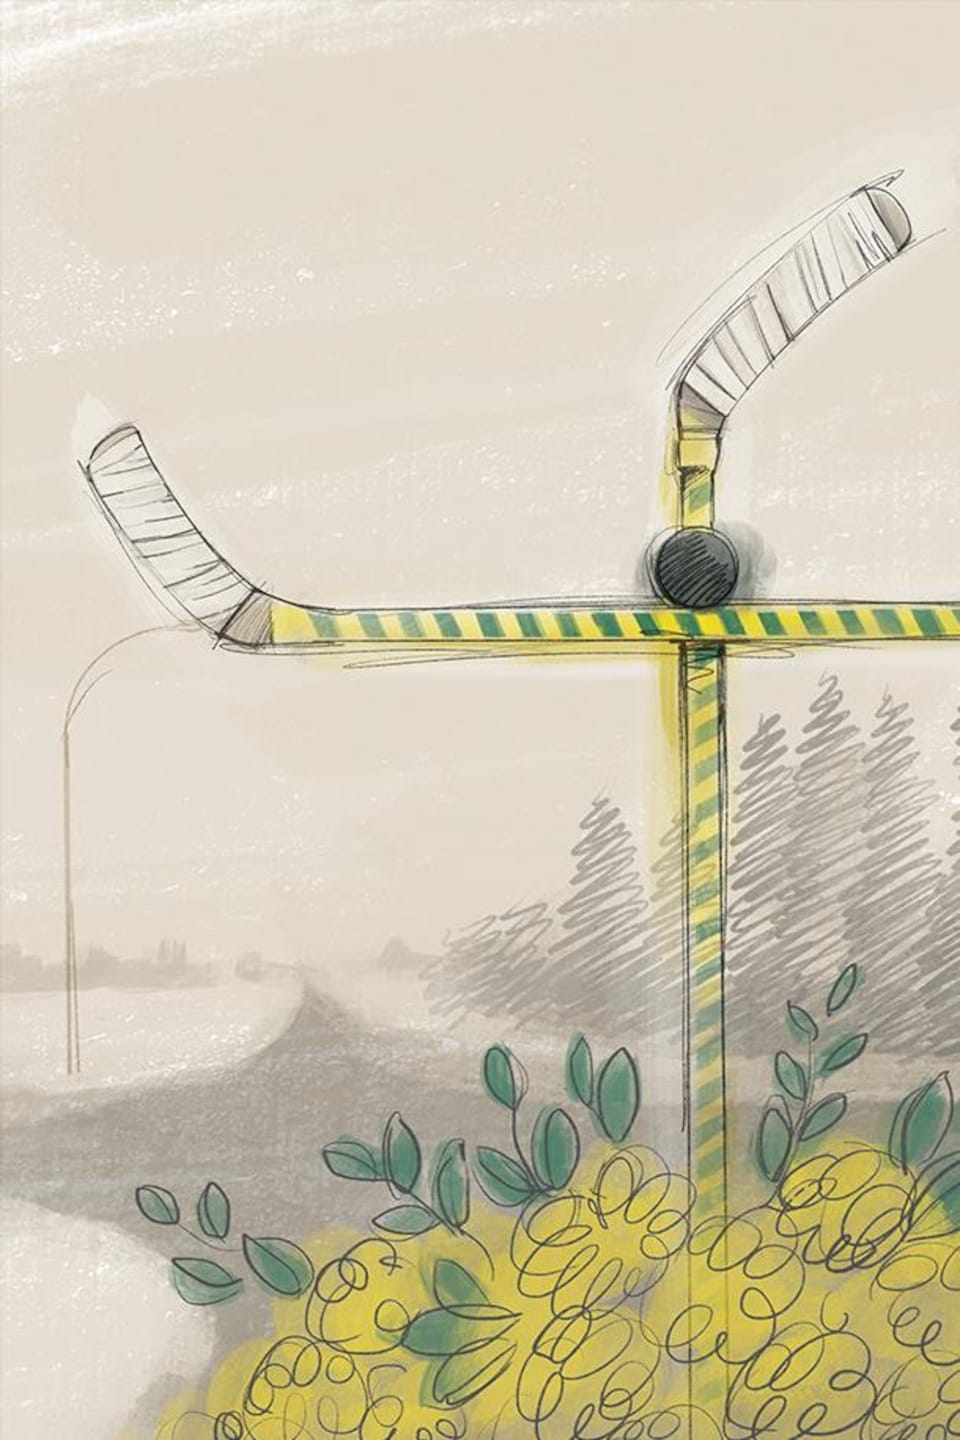 Illustration de bâtons de hockey en forme de croix